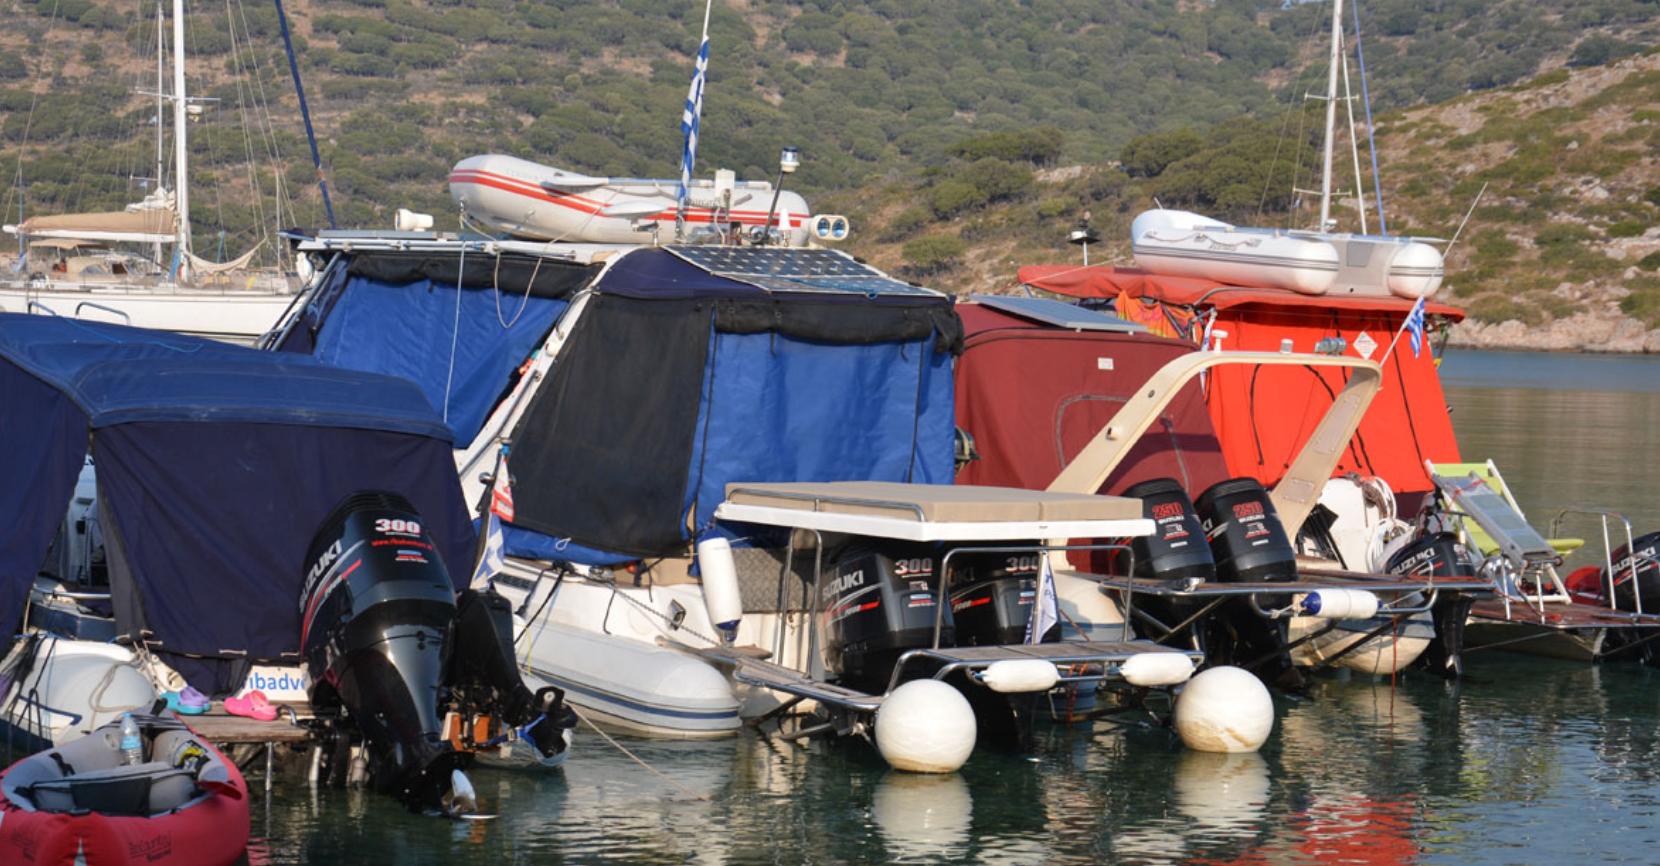 solar panels for small boats, boat solar panels